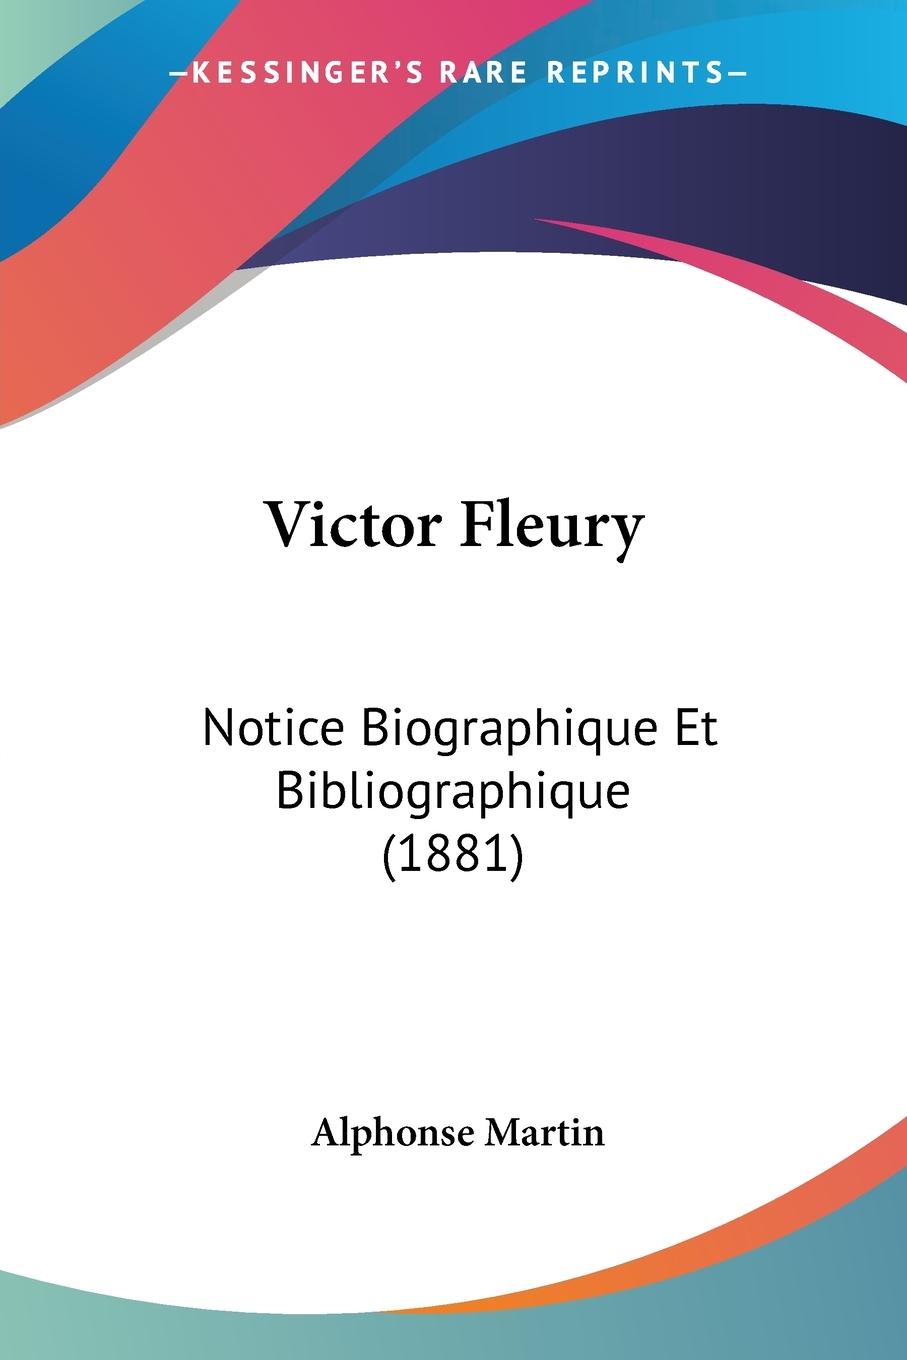 Victor Fleury - Martin, Alphonse